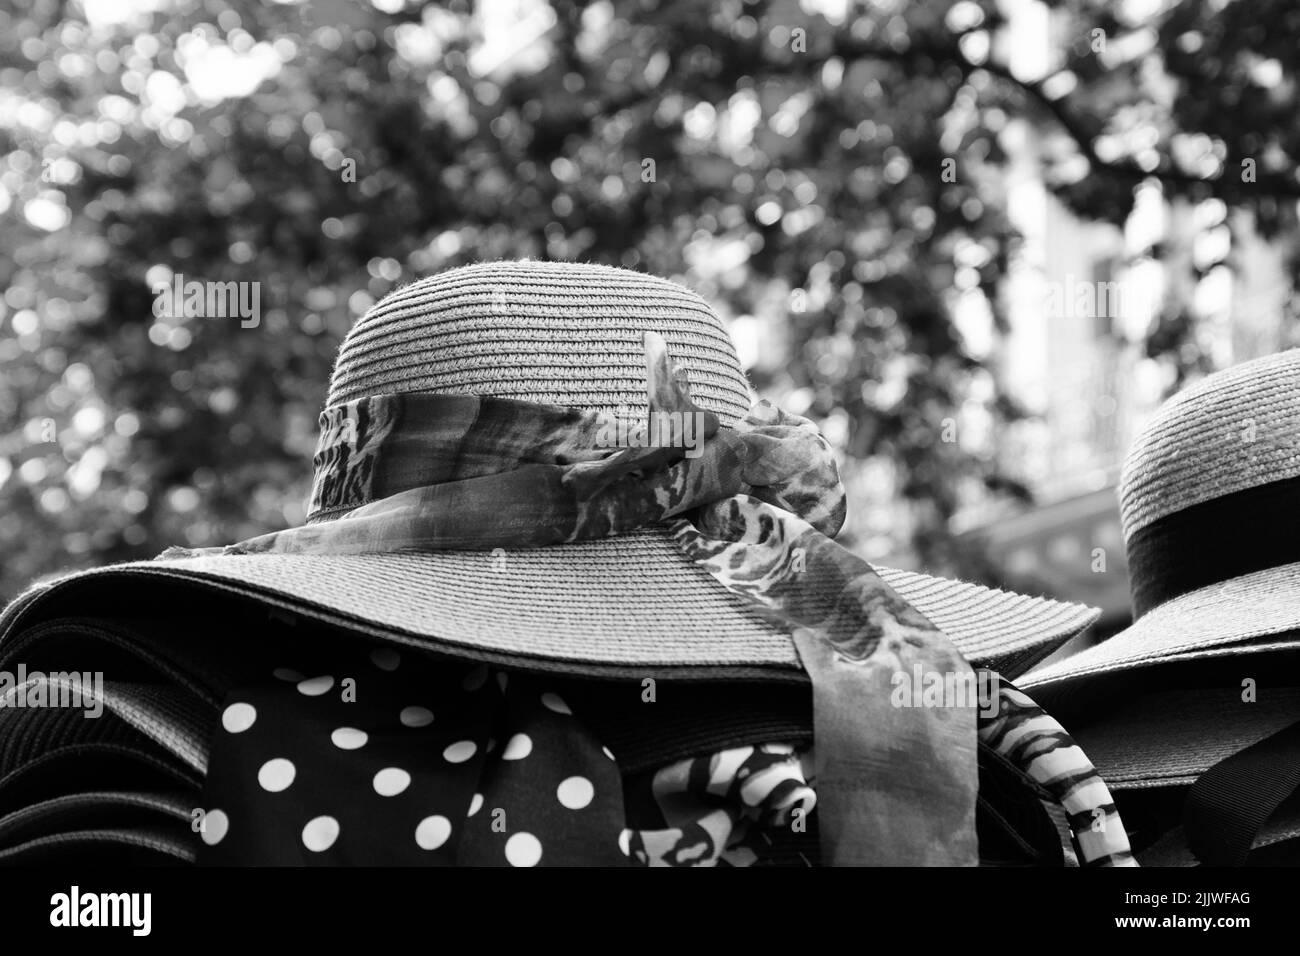 Sombrero de mujer paja natural - Modesto Hats